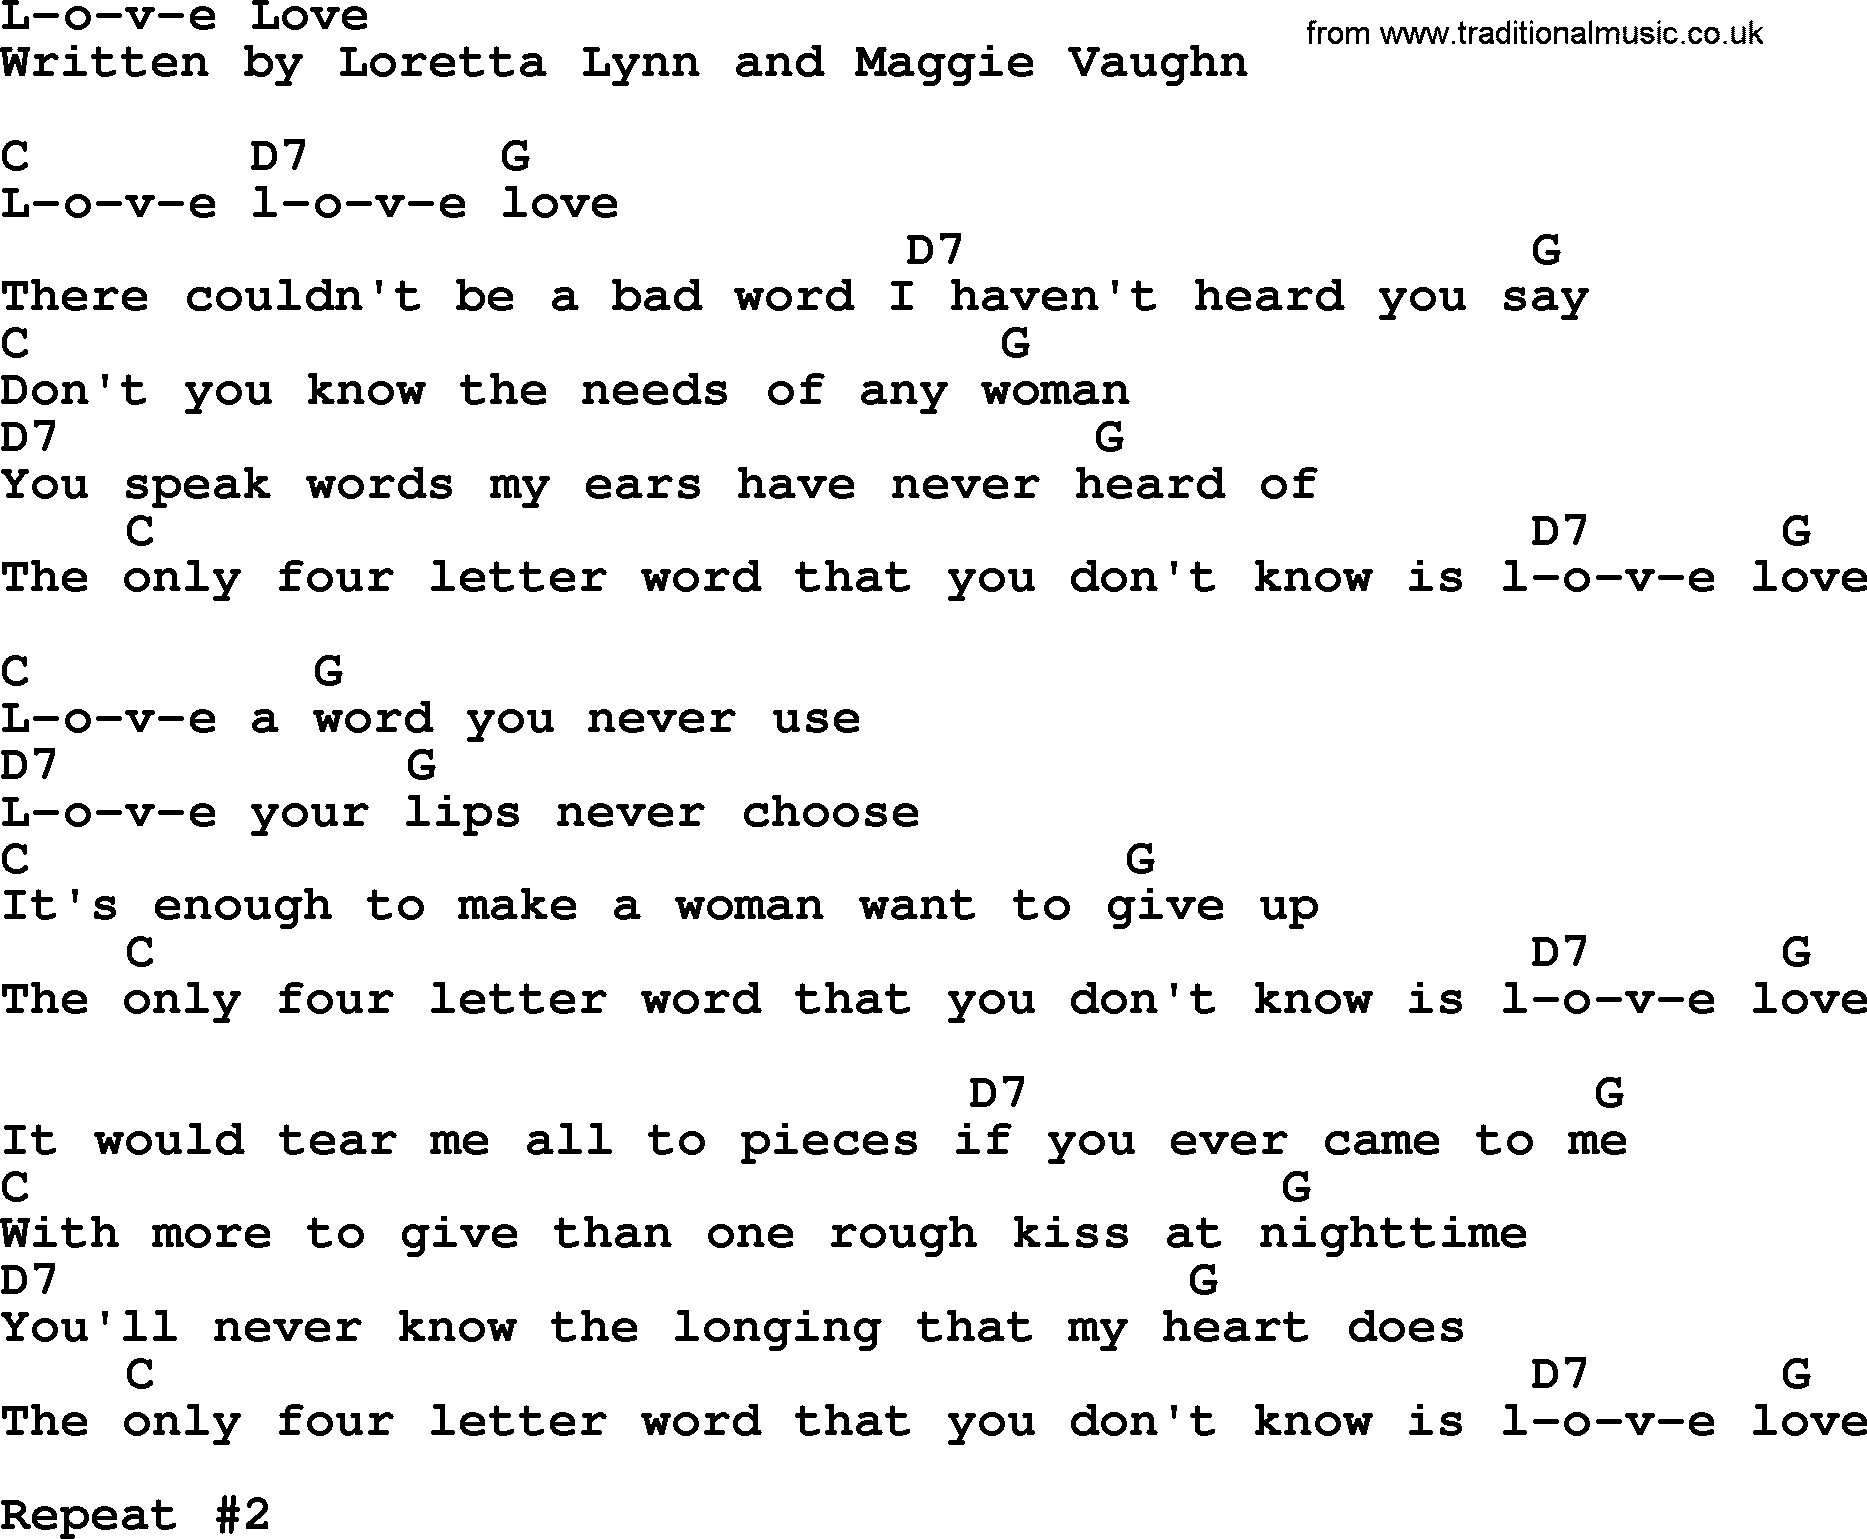 Loretta Lynn song: L-o-v-e Love lyrics and chords